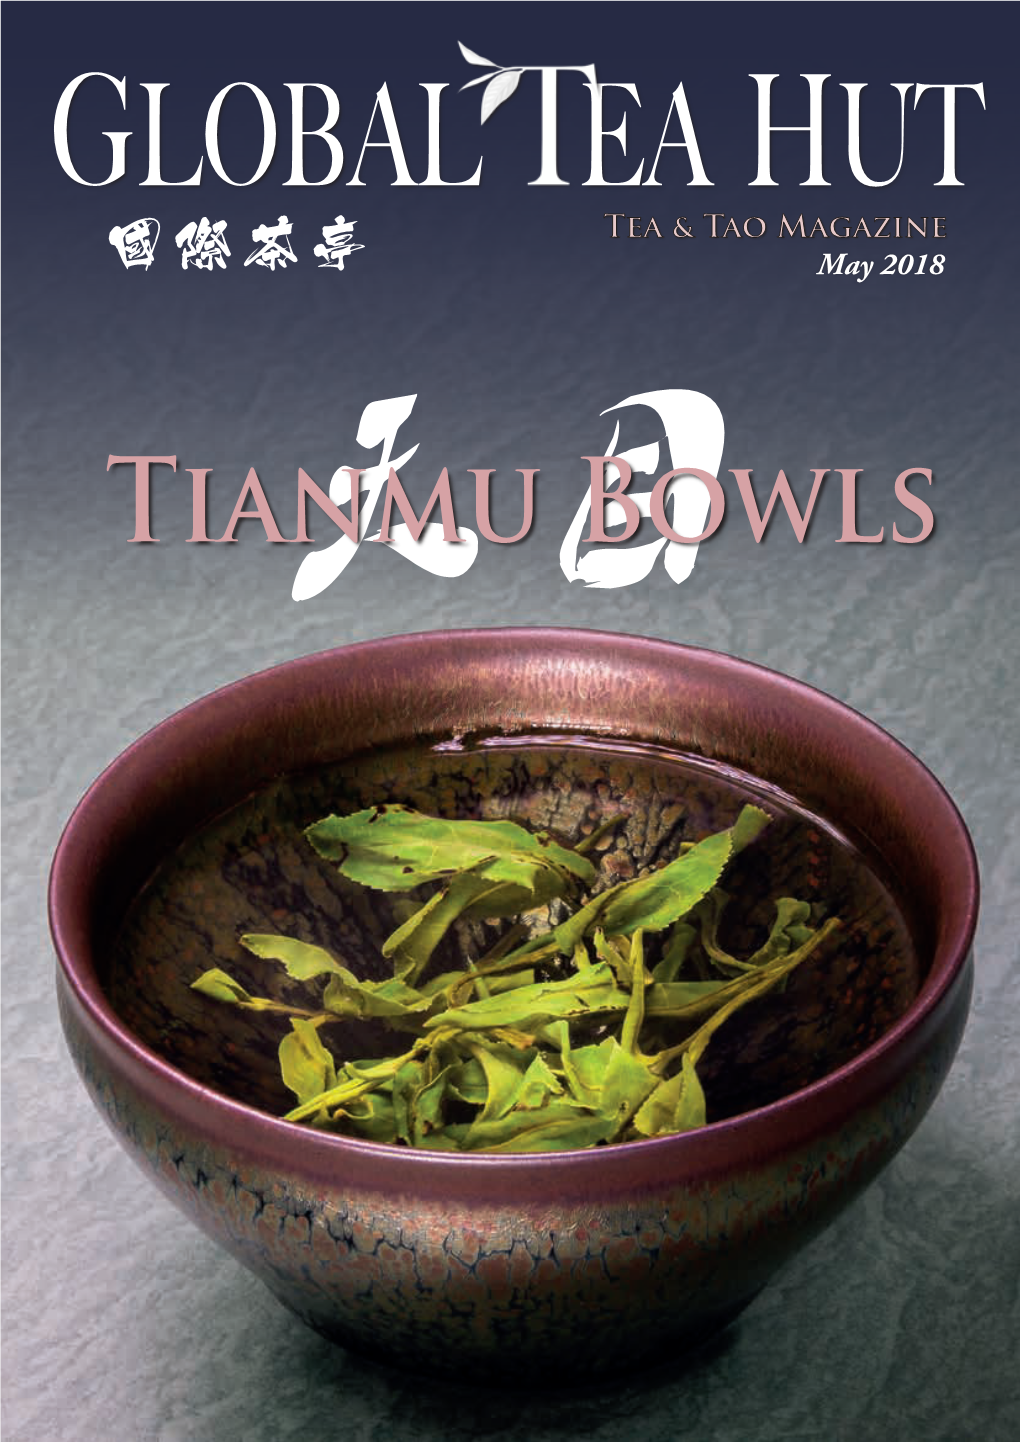 Tianmu Bowls